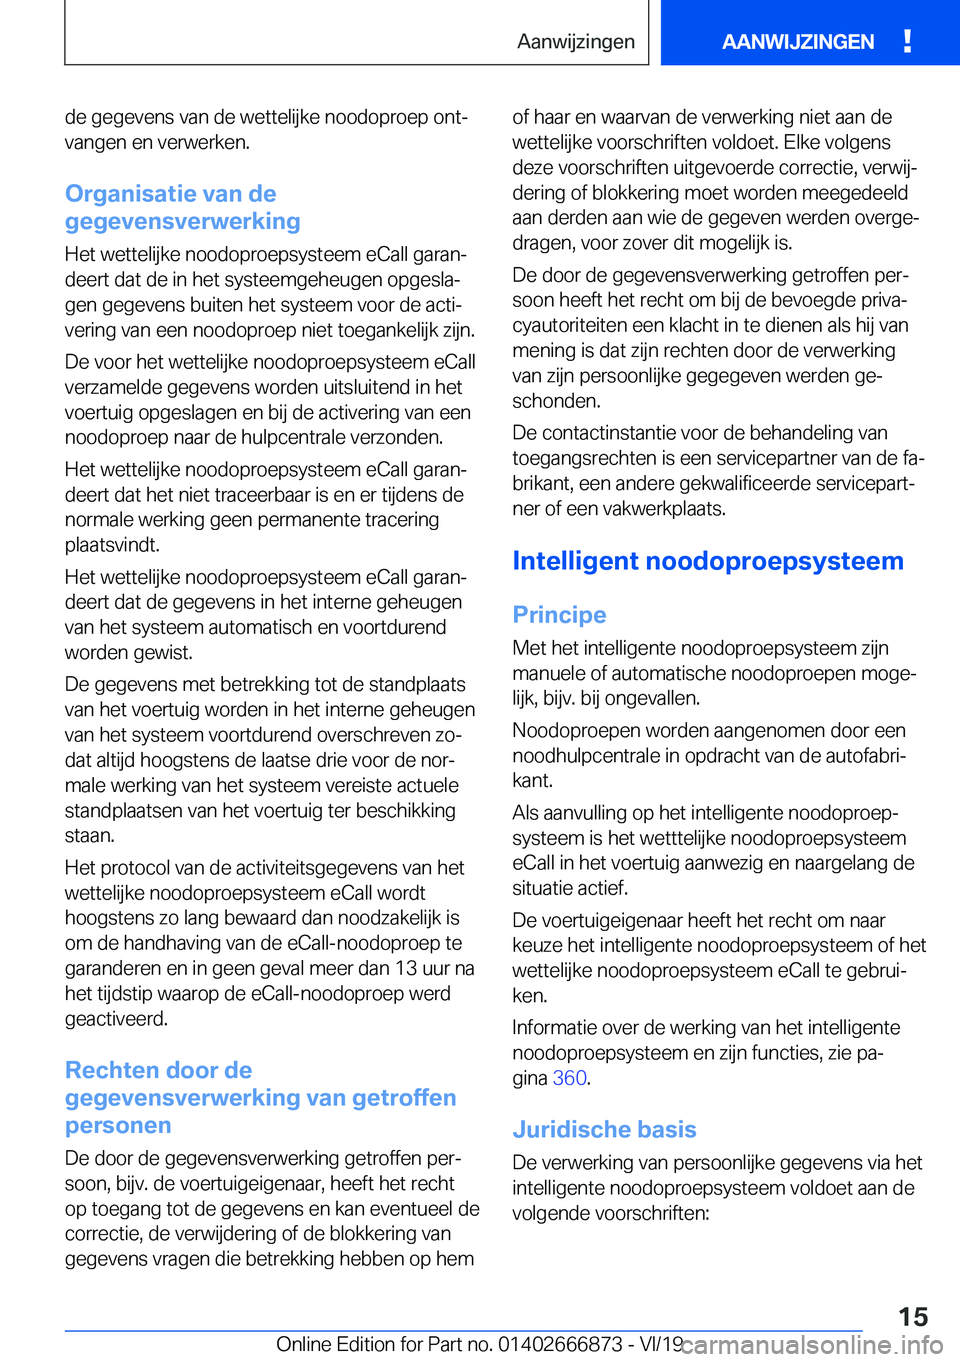 BMW X4 M 2020  Instructieboekjes (in Dutch) �d�e��g�e�g�e�v�e�n�s��v�a�n��d�e��w�e�t�t�e�l�i�j�k�e��n�o�o�d�o�p�r�o�e�p��o�n�tj�v�a�n�g�e�n��e�n��v�e�r�w�e�r�k�e�n�.
�O�r�g�a�n�i�s�a�t�i�e��v�a�n��d�e
�g�e�g�e�v�e�n�s�v�e�r�w�e�r�k�i